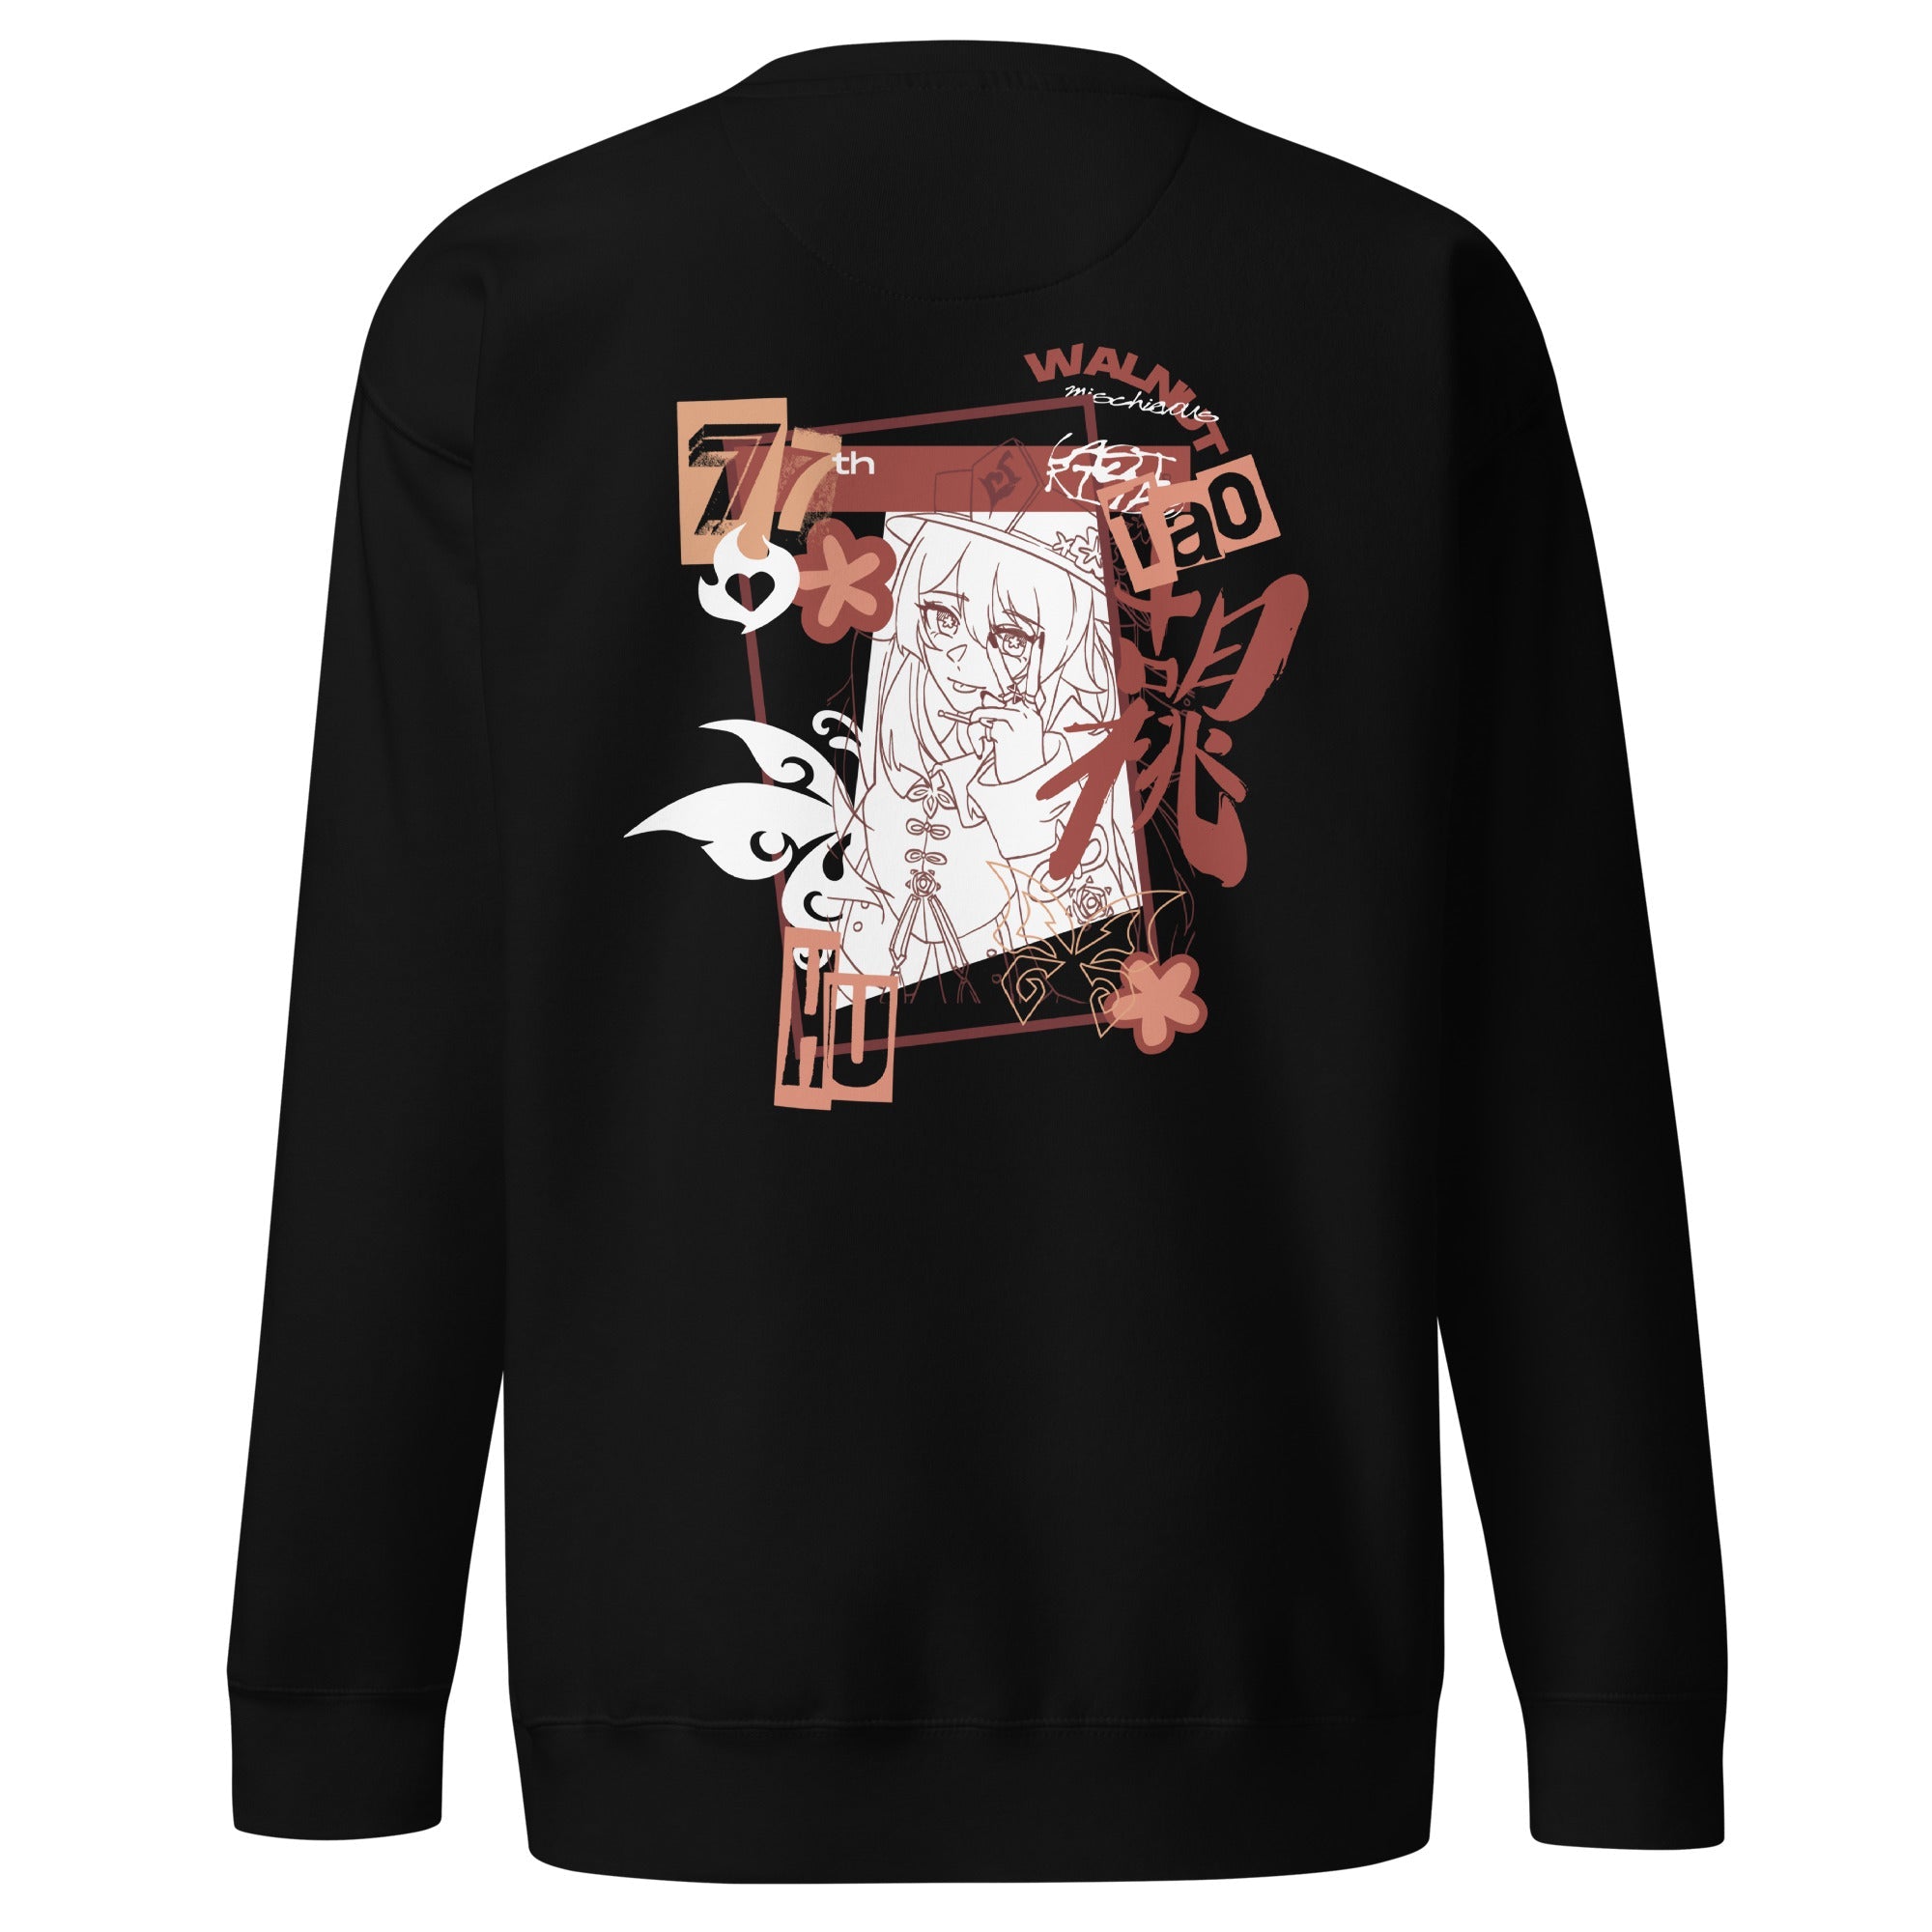 LAST RITES • sweatshirt - Jackler - anime-inspired streetwear - anime clothing